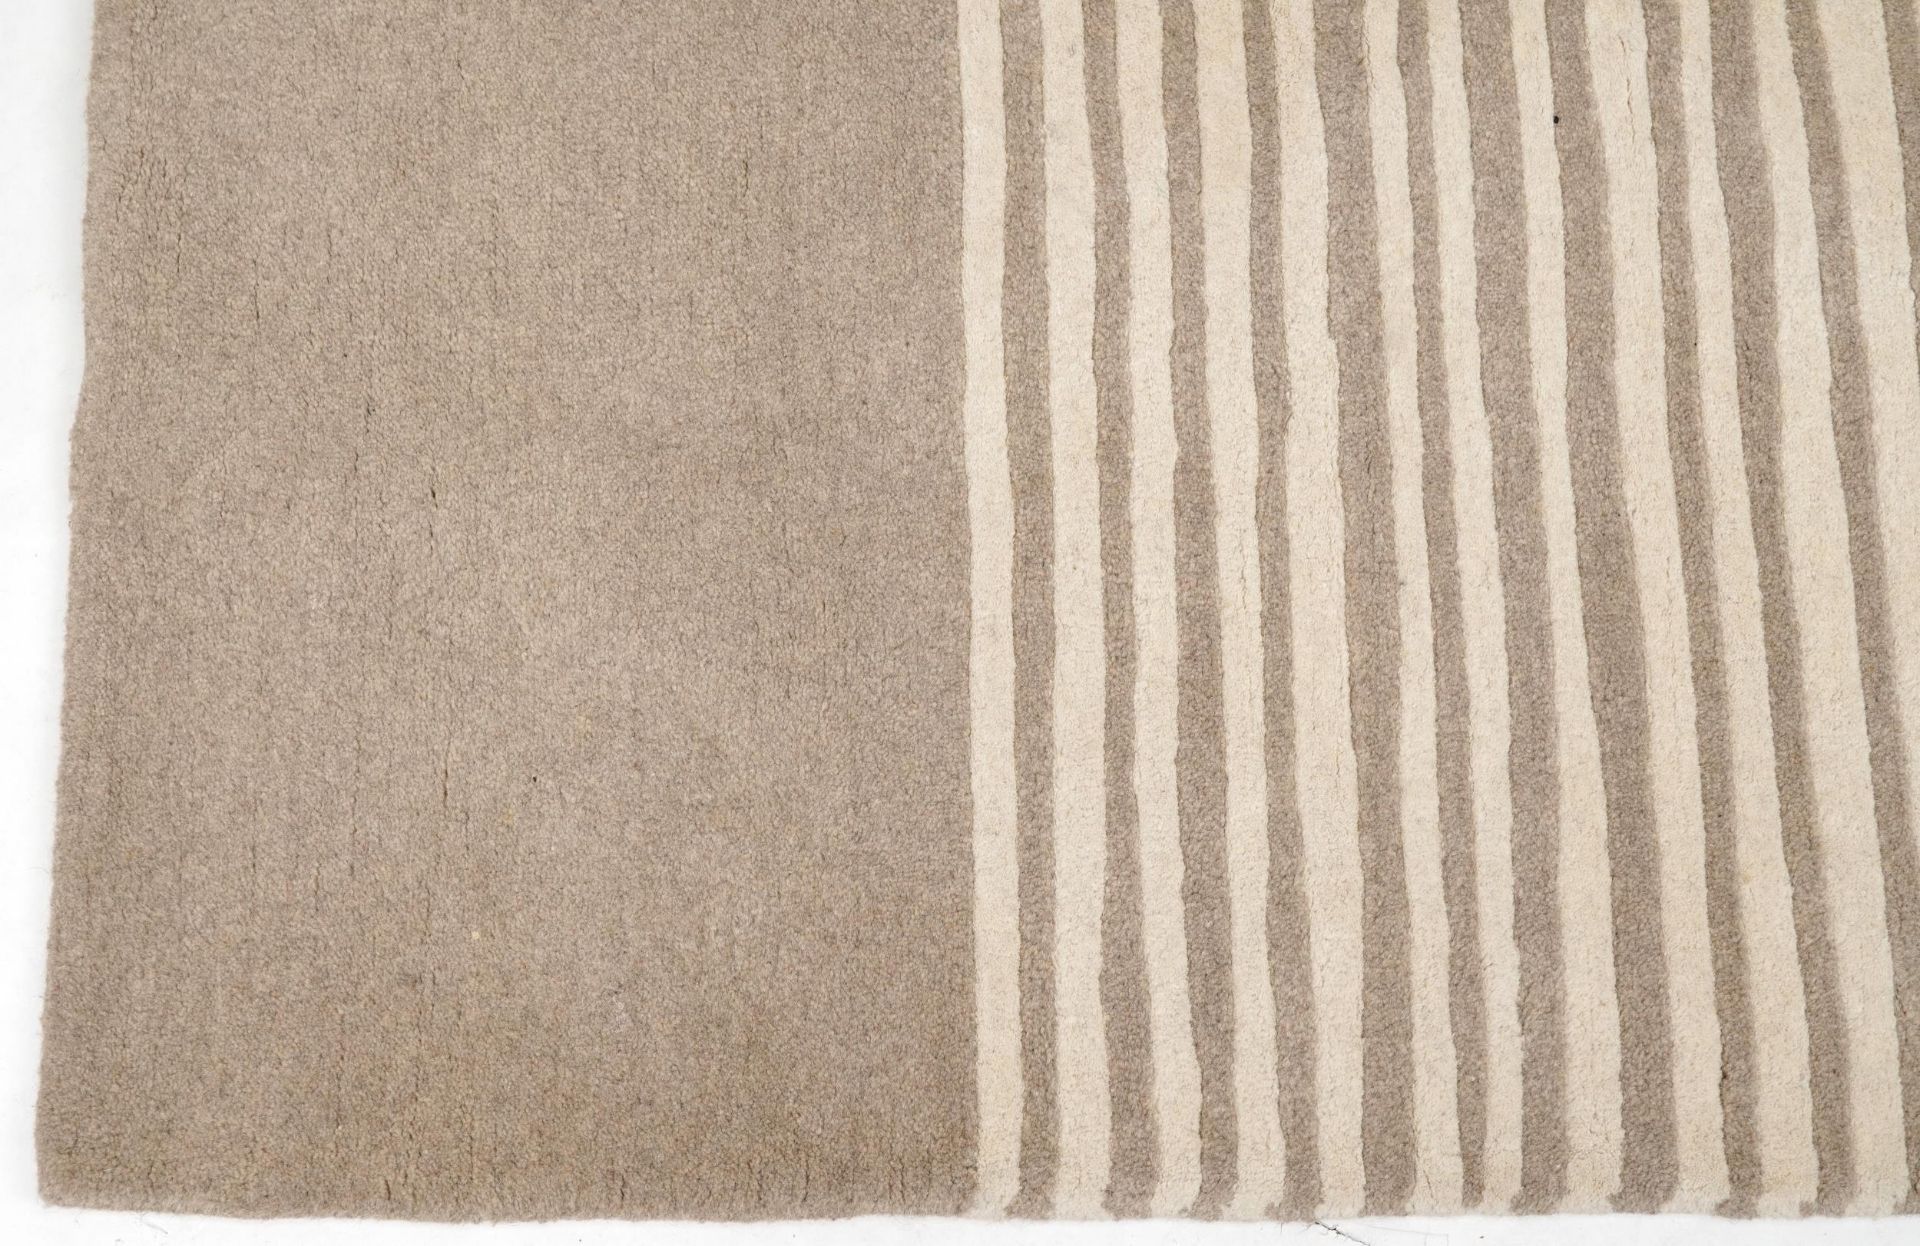 Pair of Kelaty contemporary wool rugs, 180cm x 120cm - Image 12 of 16